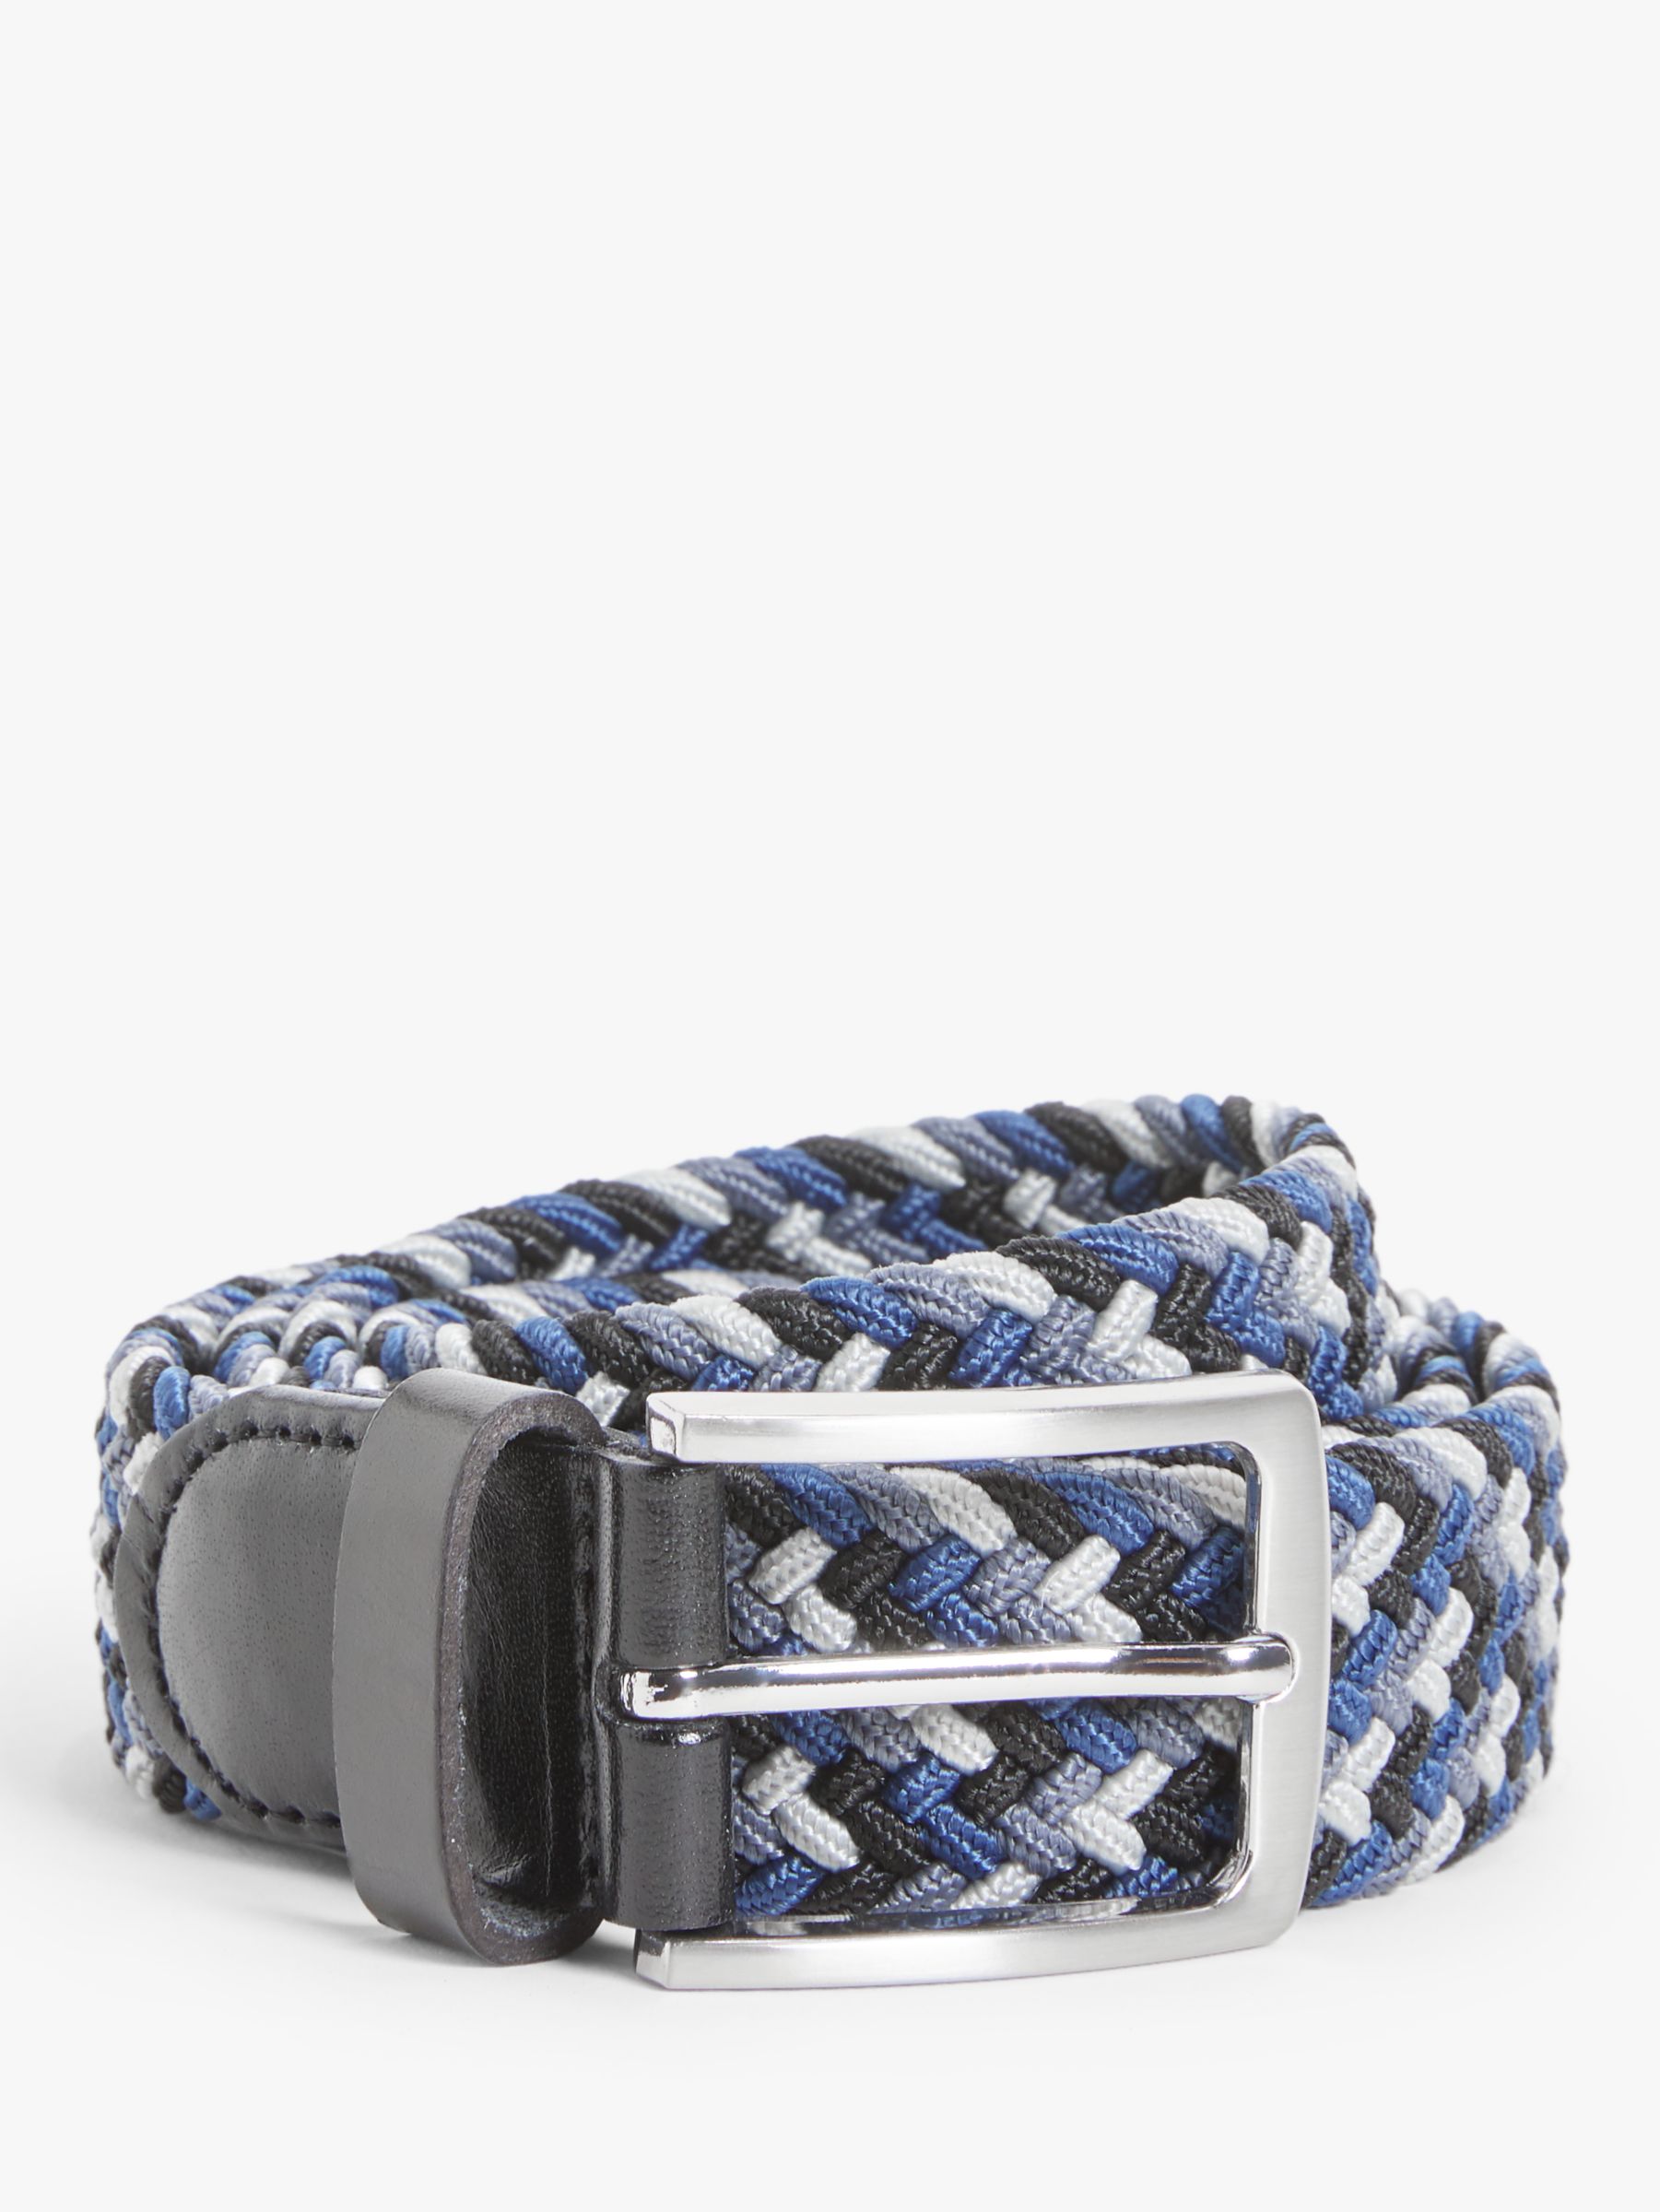 John Lewis 35mm Woven Belt, Blue/Multi, S